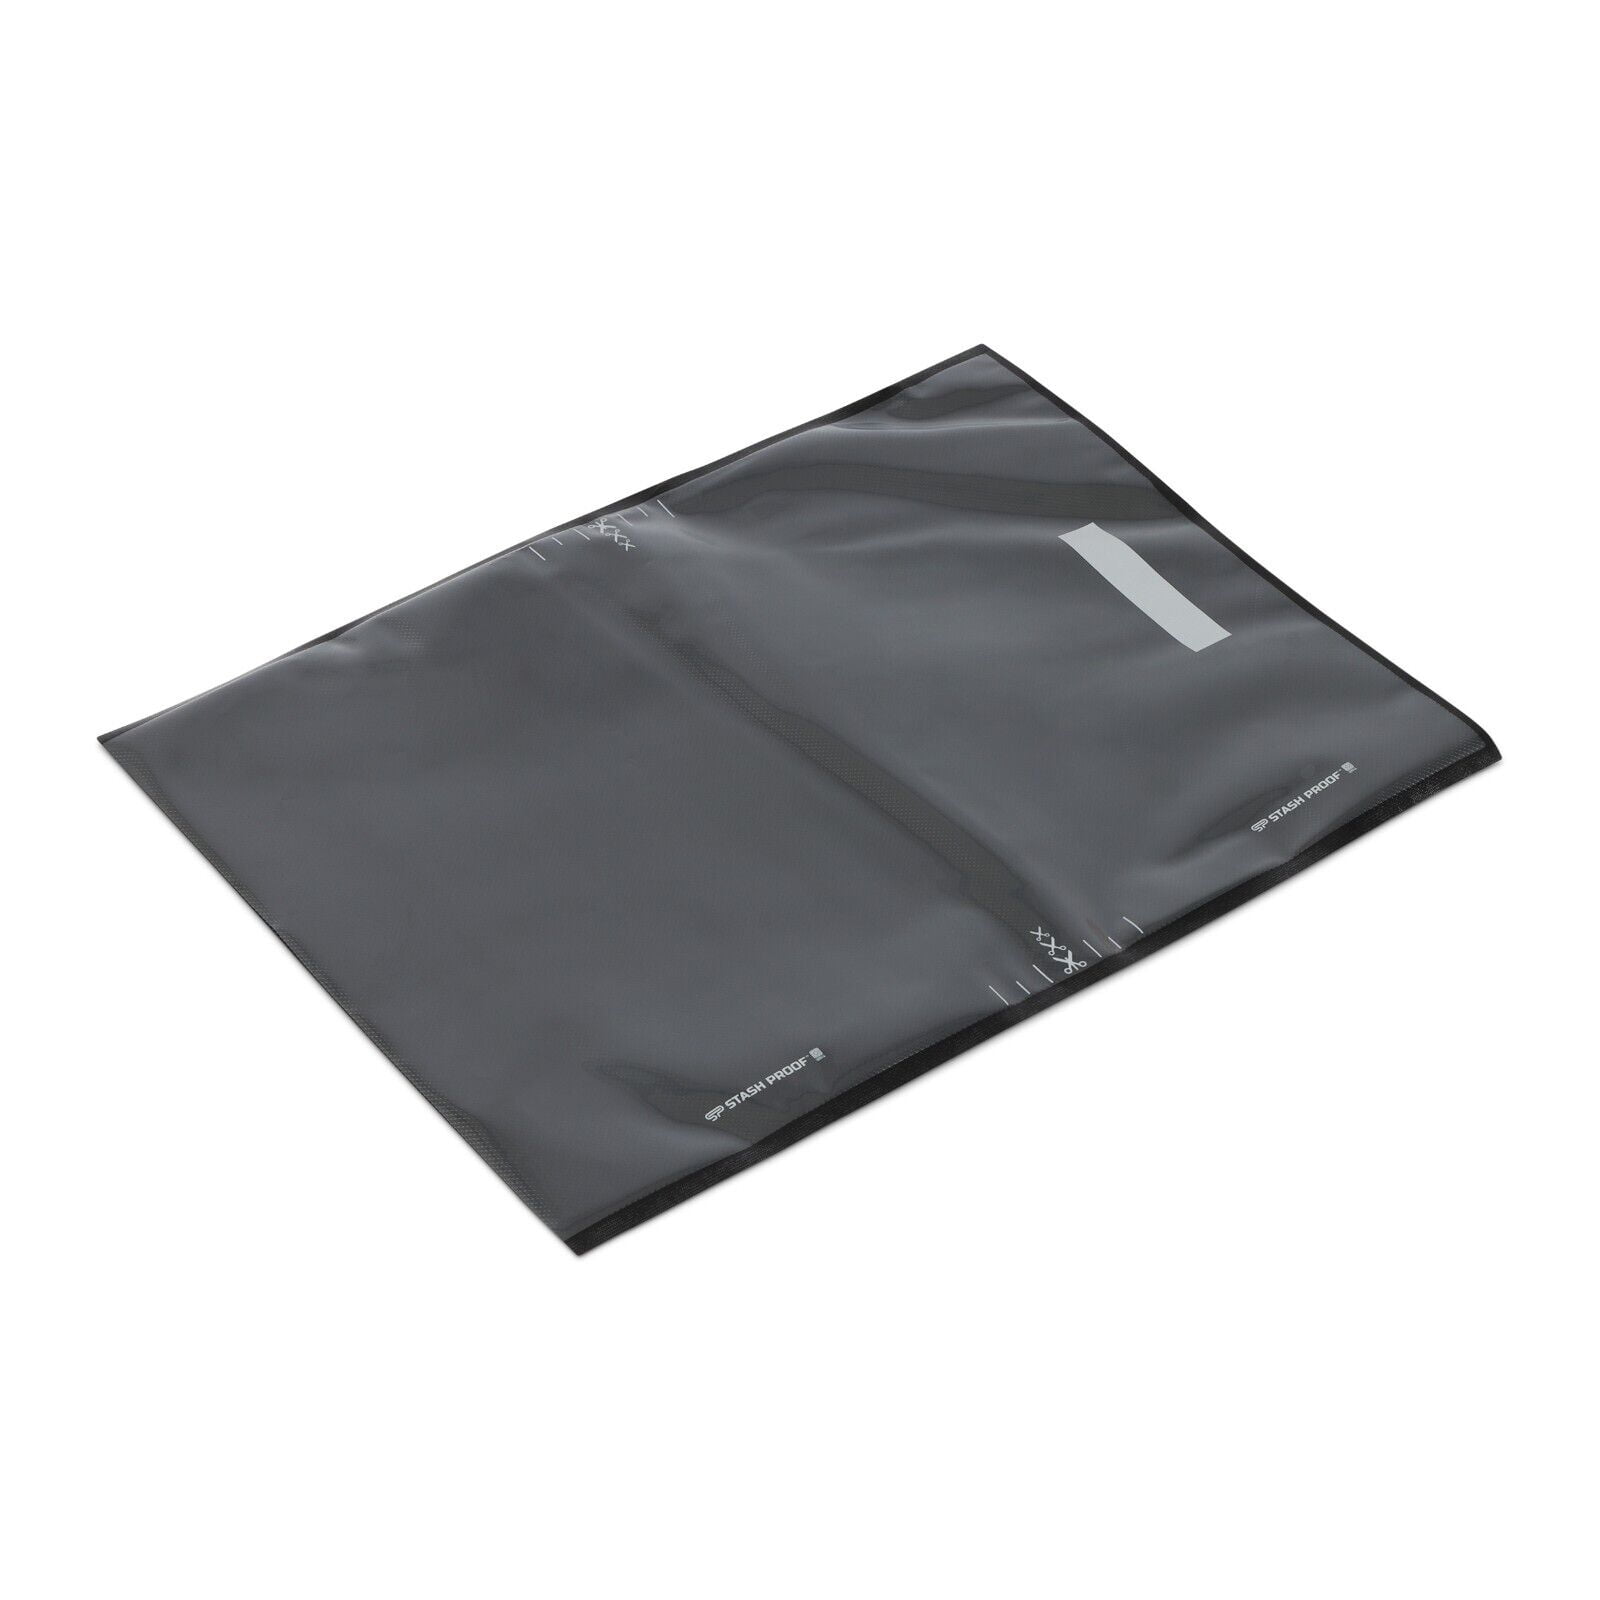 Self Seal Bags, 4.75 x 5.75 inch - 50 pack